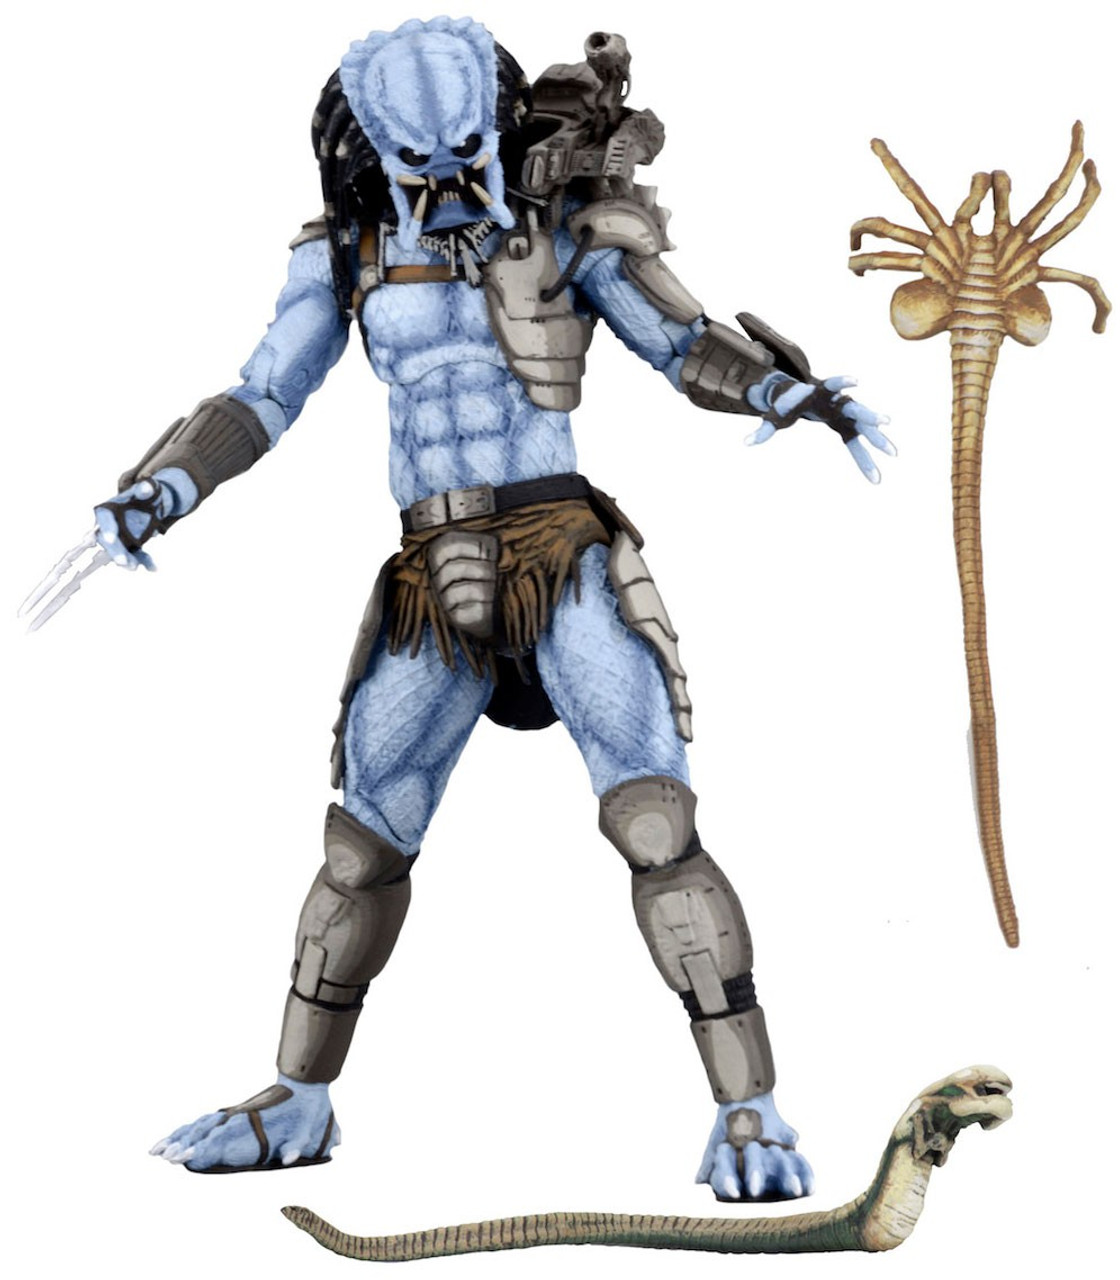 Neca Alien Vs Predator Arcade Game Mad Predator 7 Action Figure Ultimate Body Toywiz - new iron man titan suit roblox mad city new update